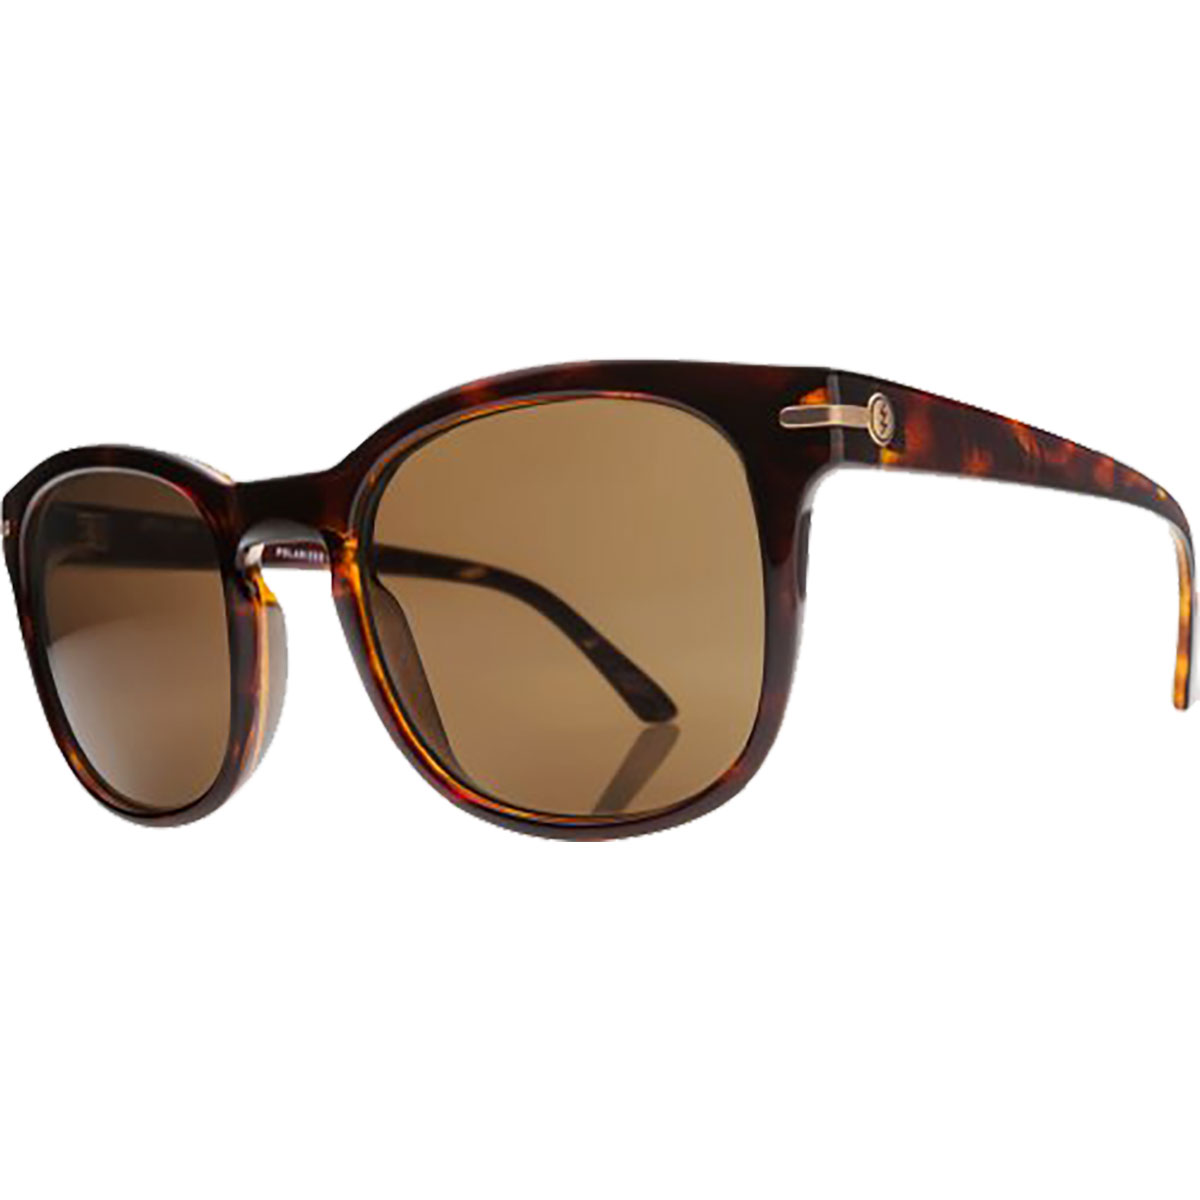 Electric Rip Rock Sunglasses,OS,Tortoise Shell w/Melanin 1 Bronze Polarized Lens - image 1 of 1